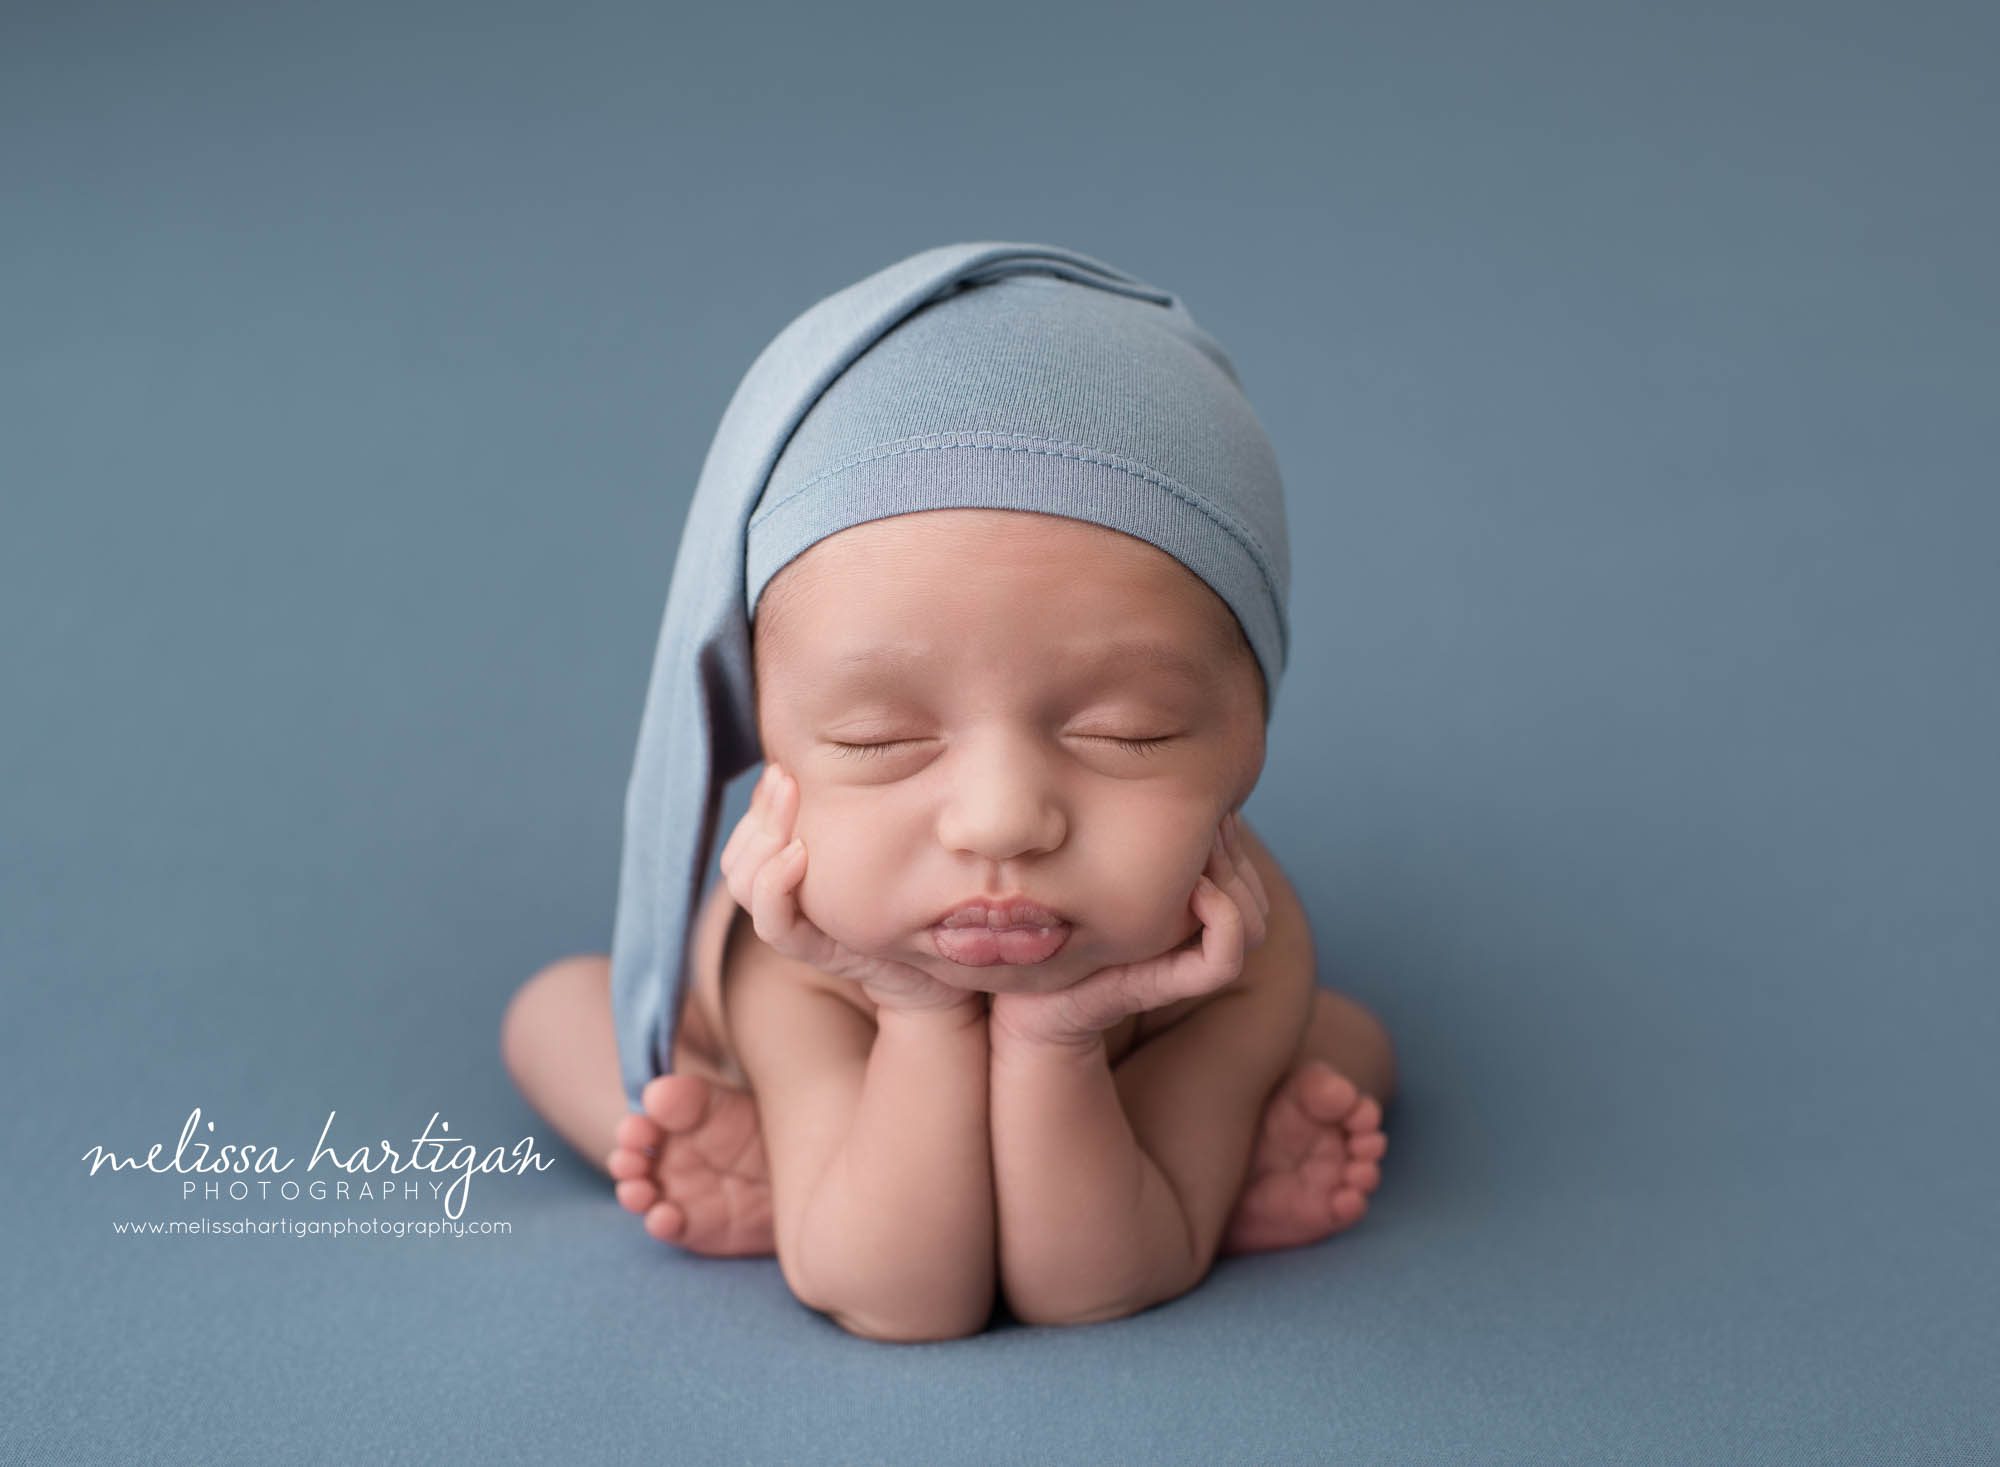 Newborn baby boy posed froggy pose